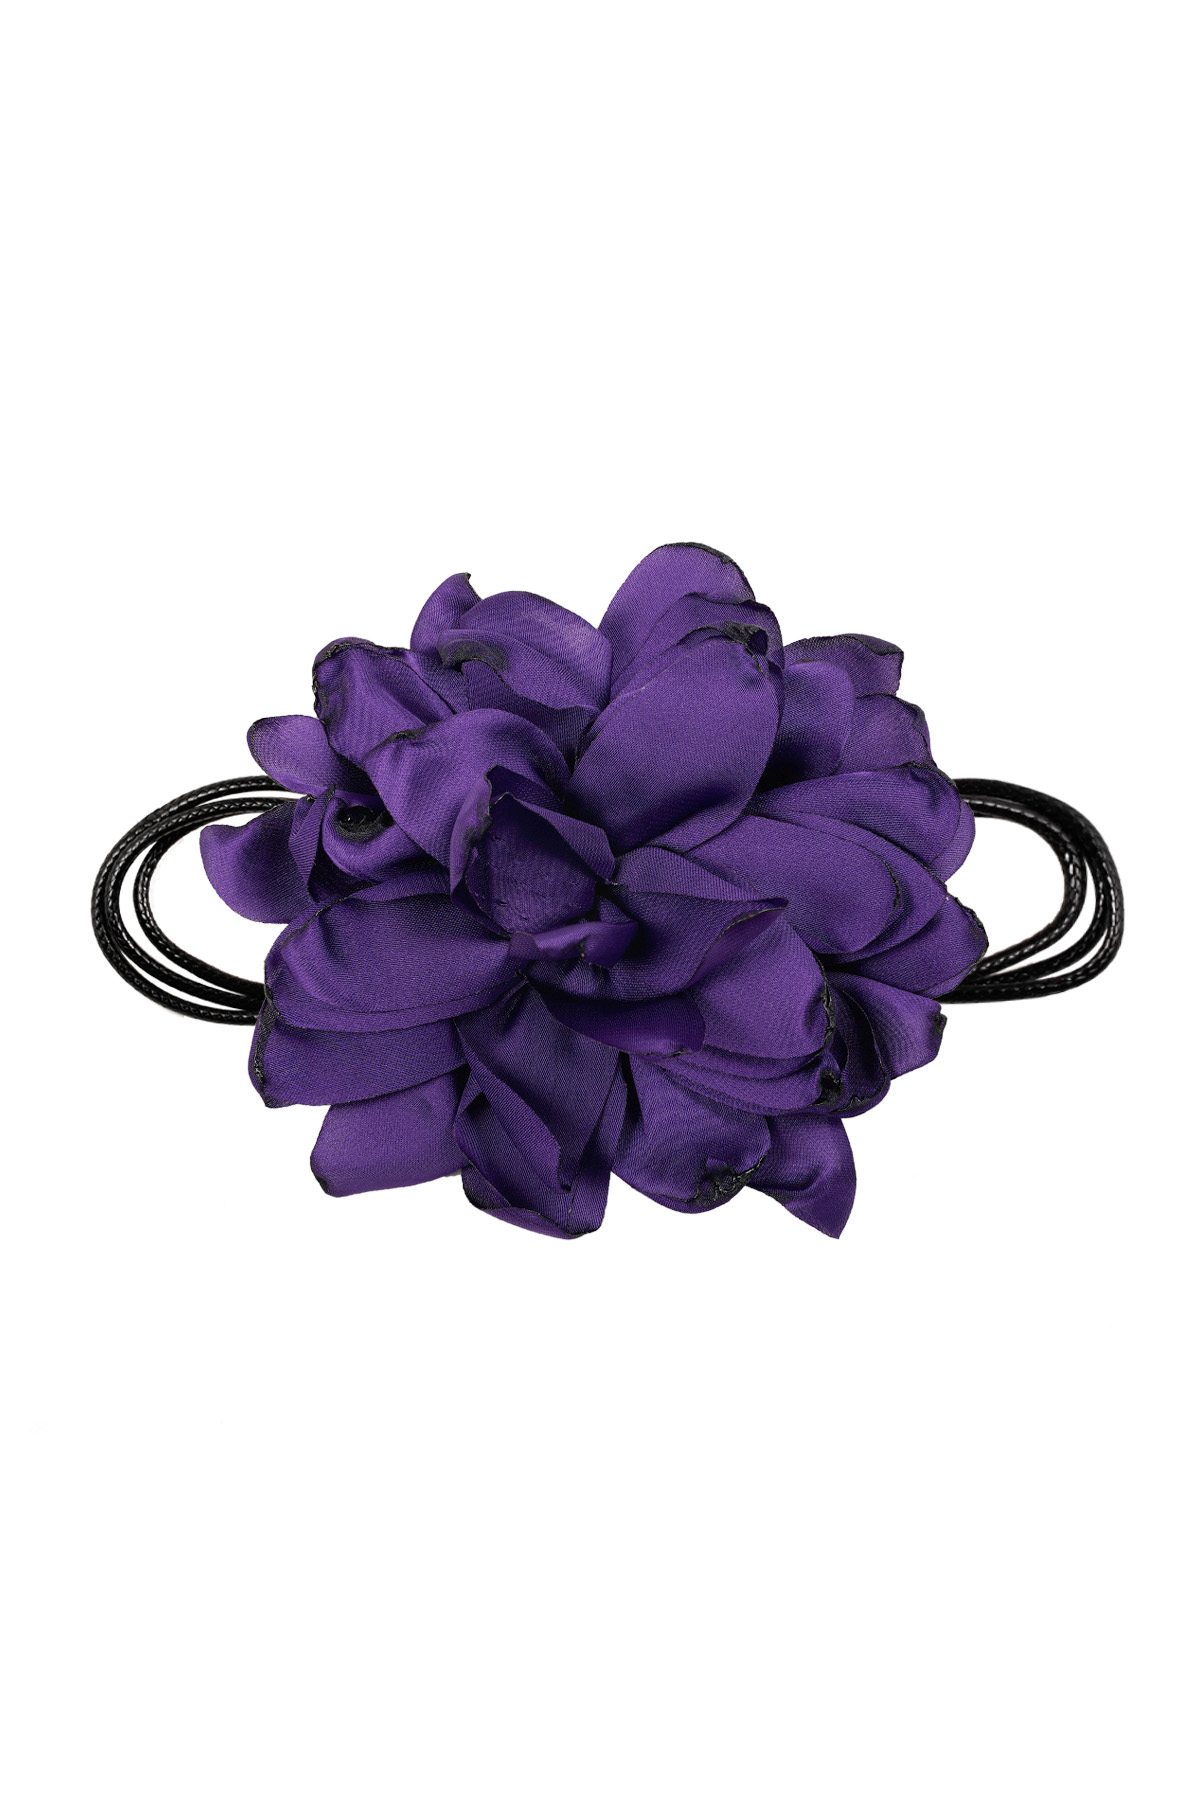 Collier grande fleur - violet 